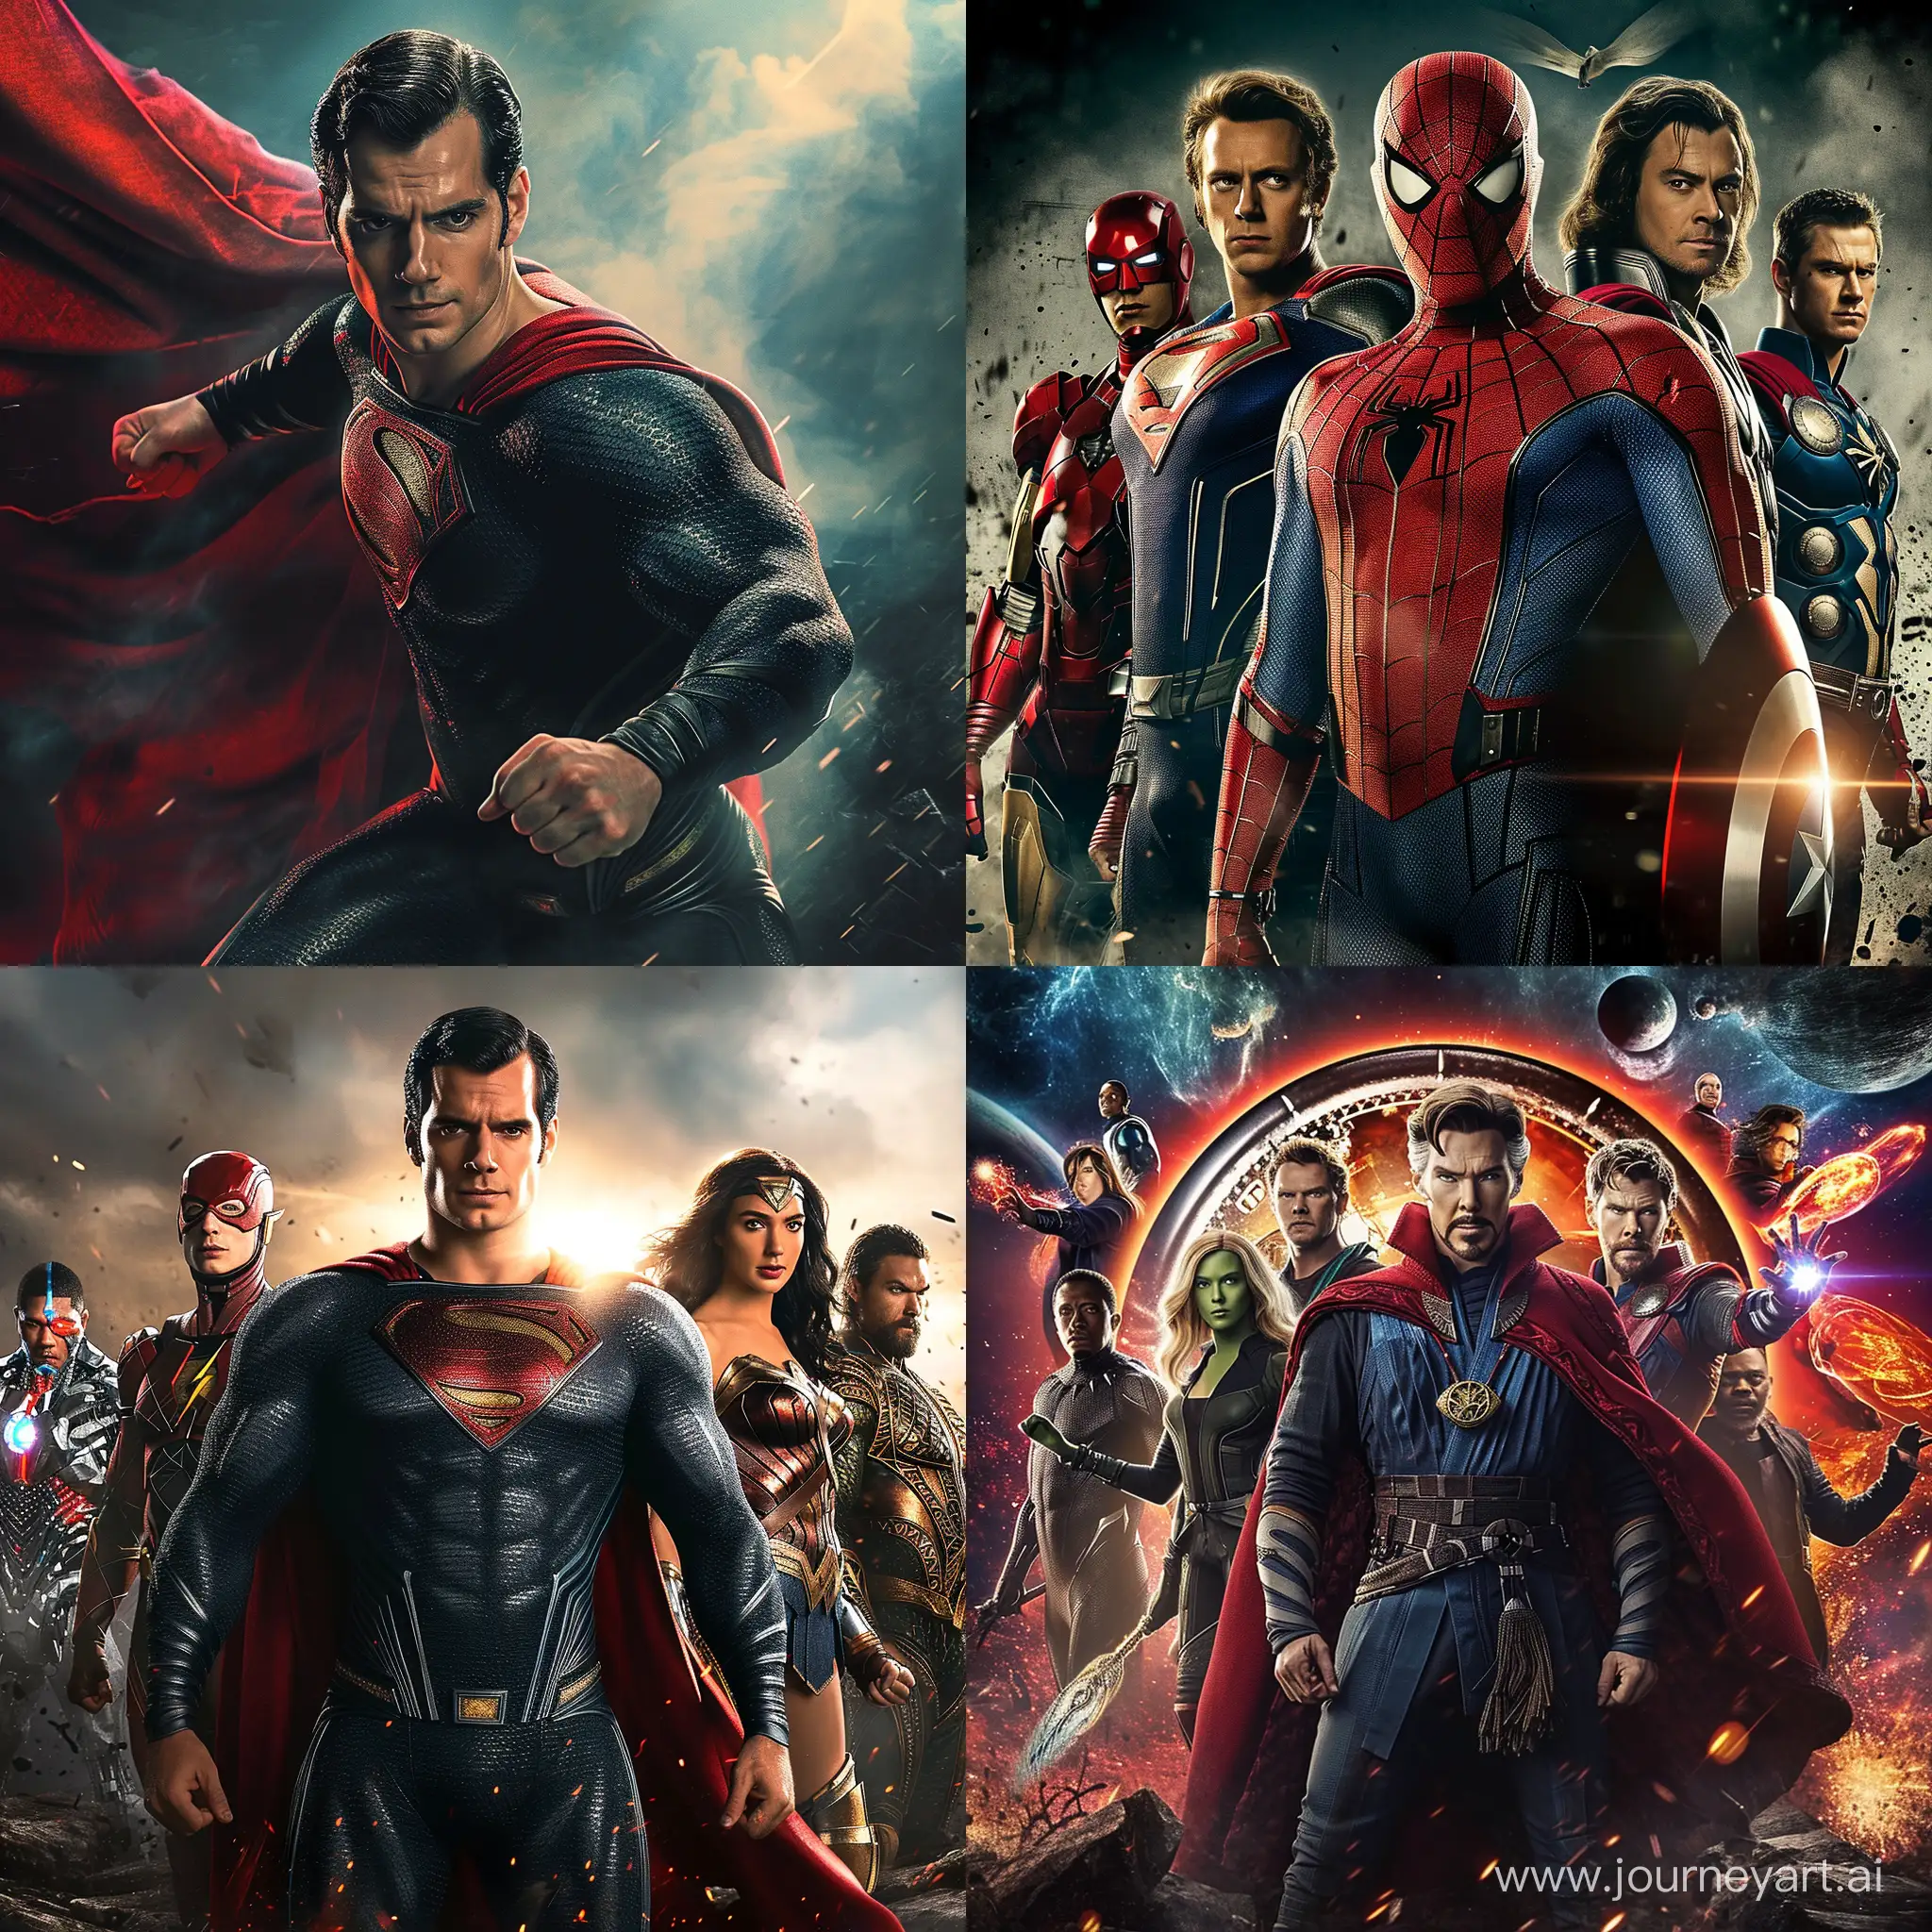 Dynamic-Superhero-Movie-Poster-with-Vigilante-Action